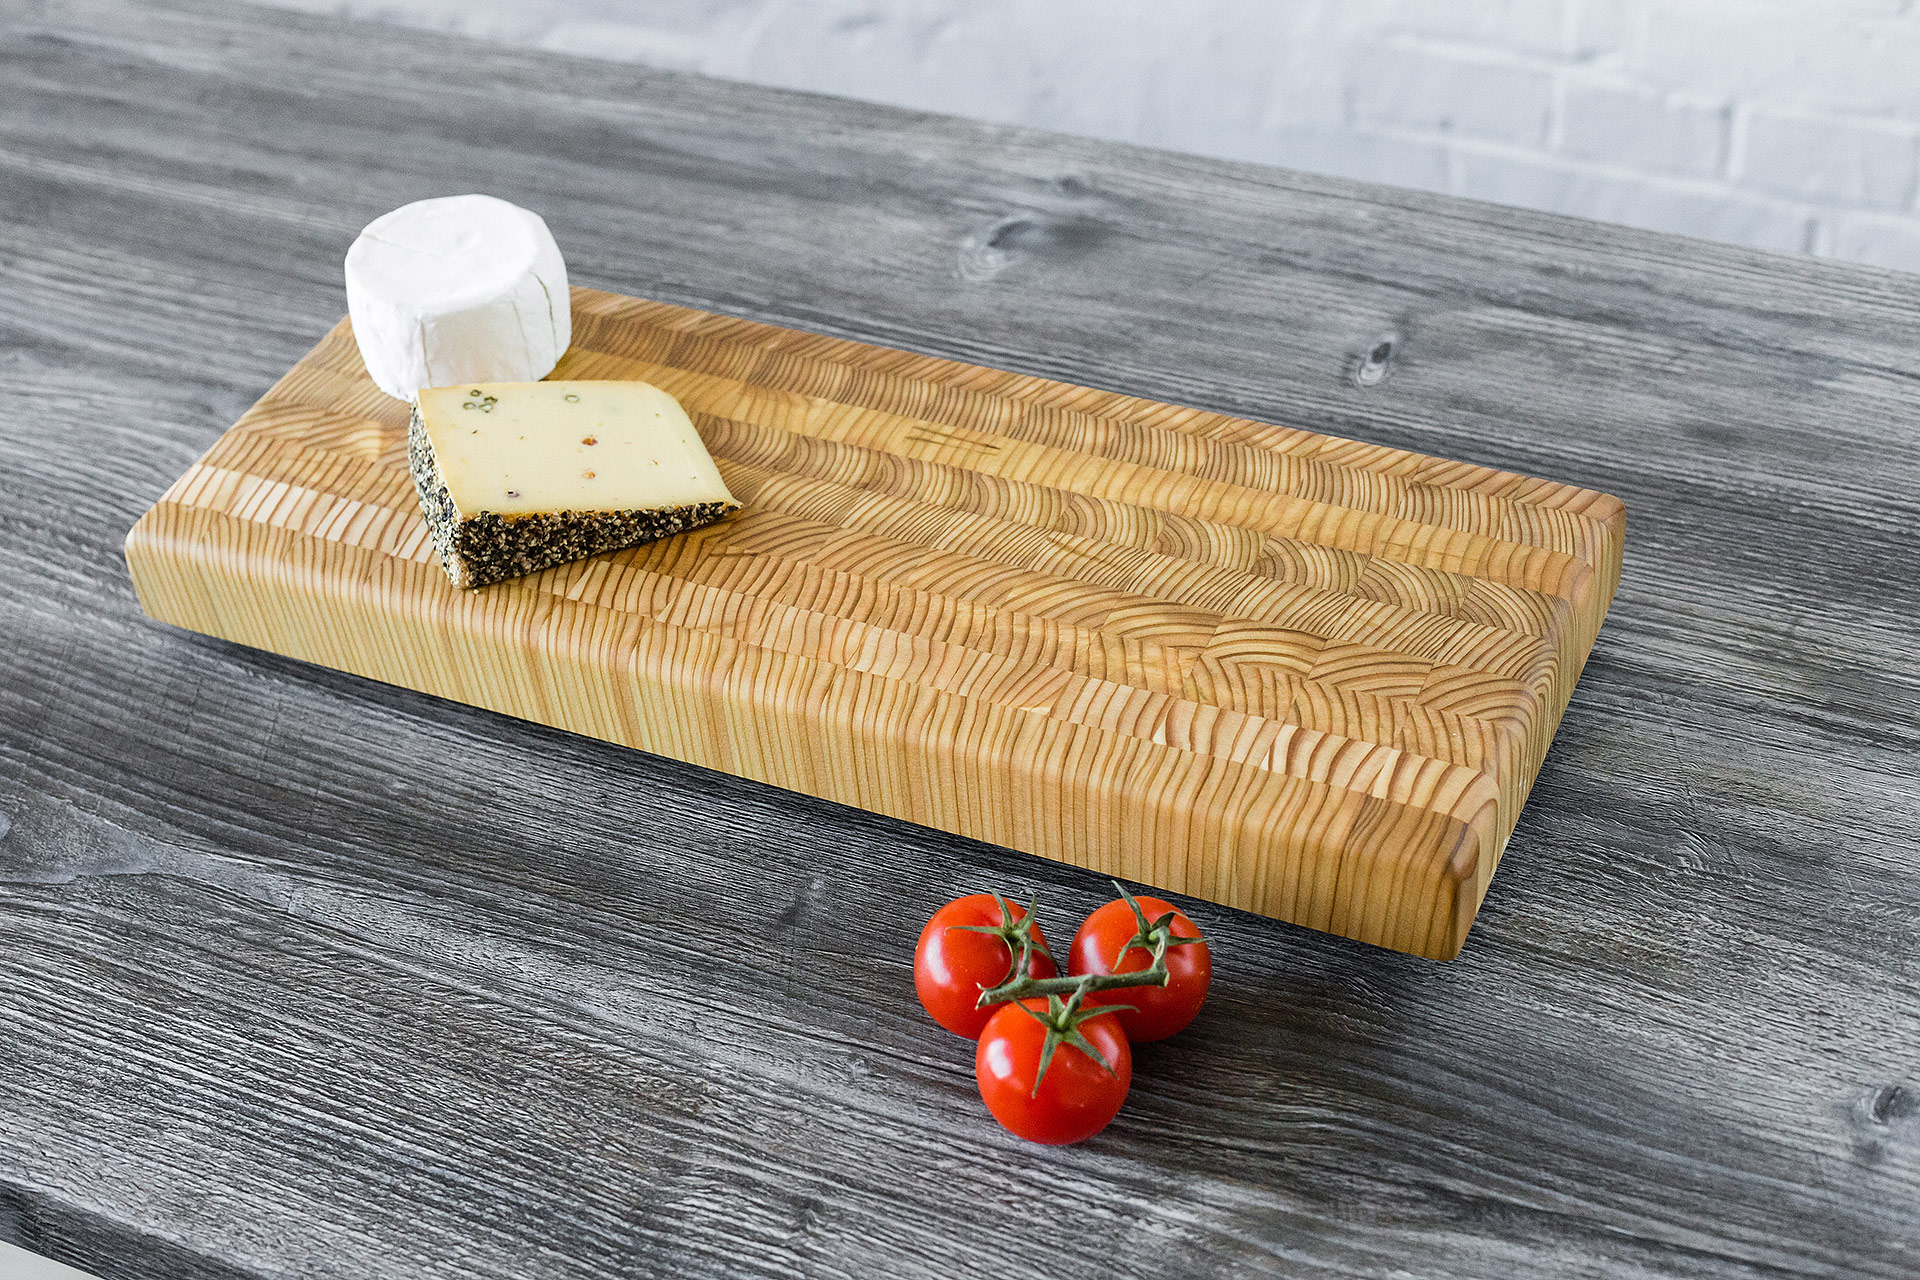 Cheese board